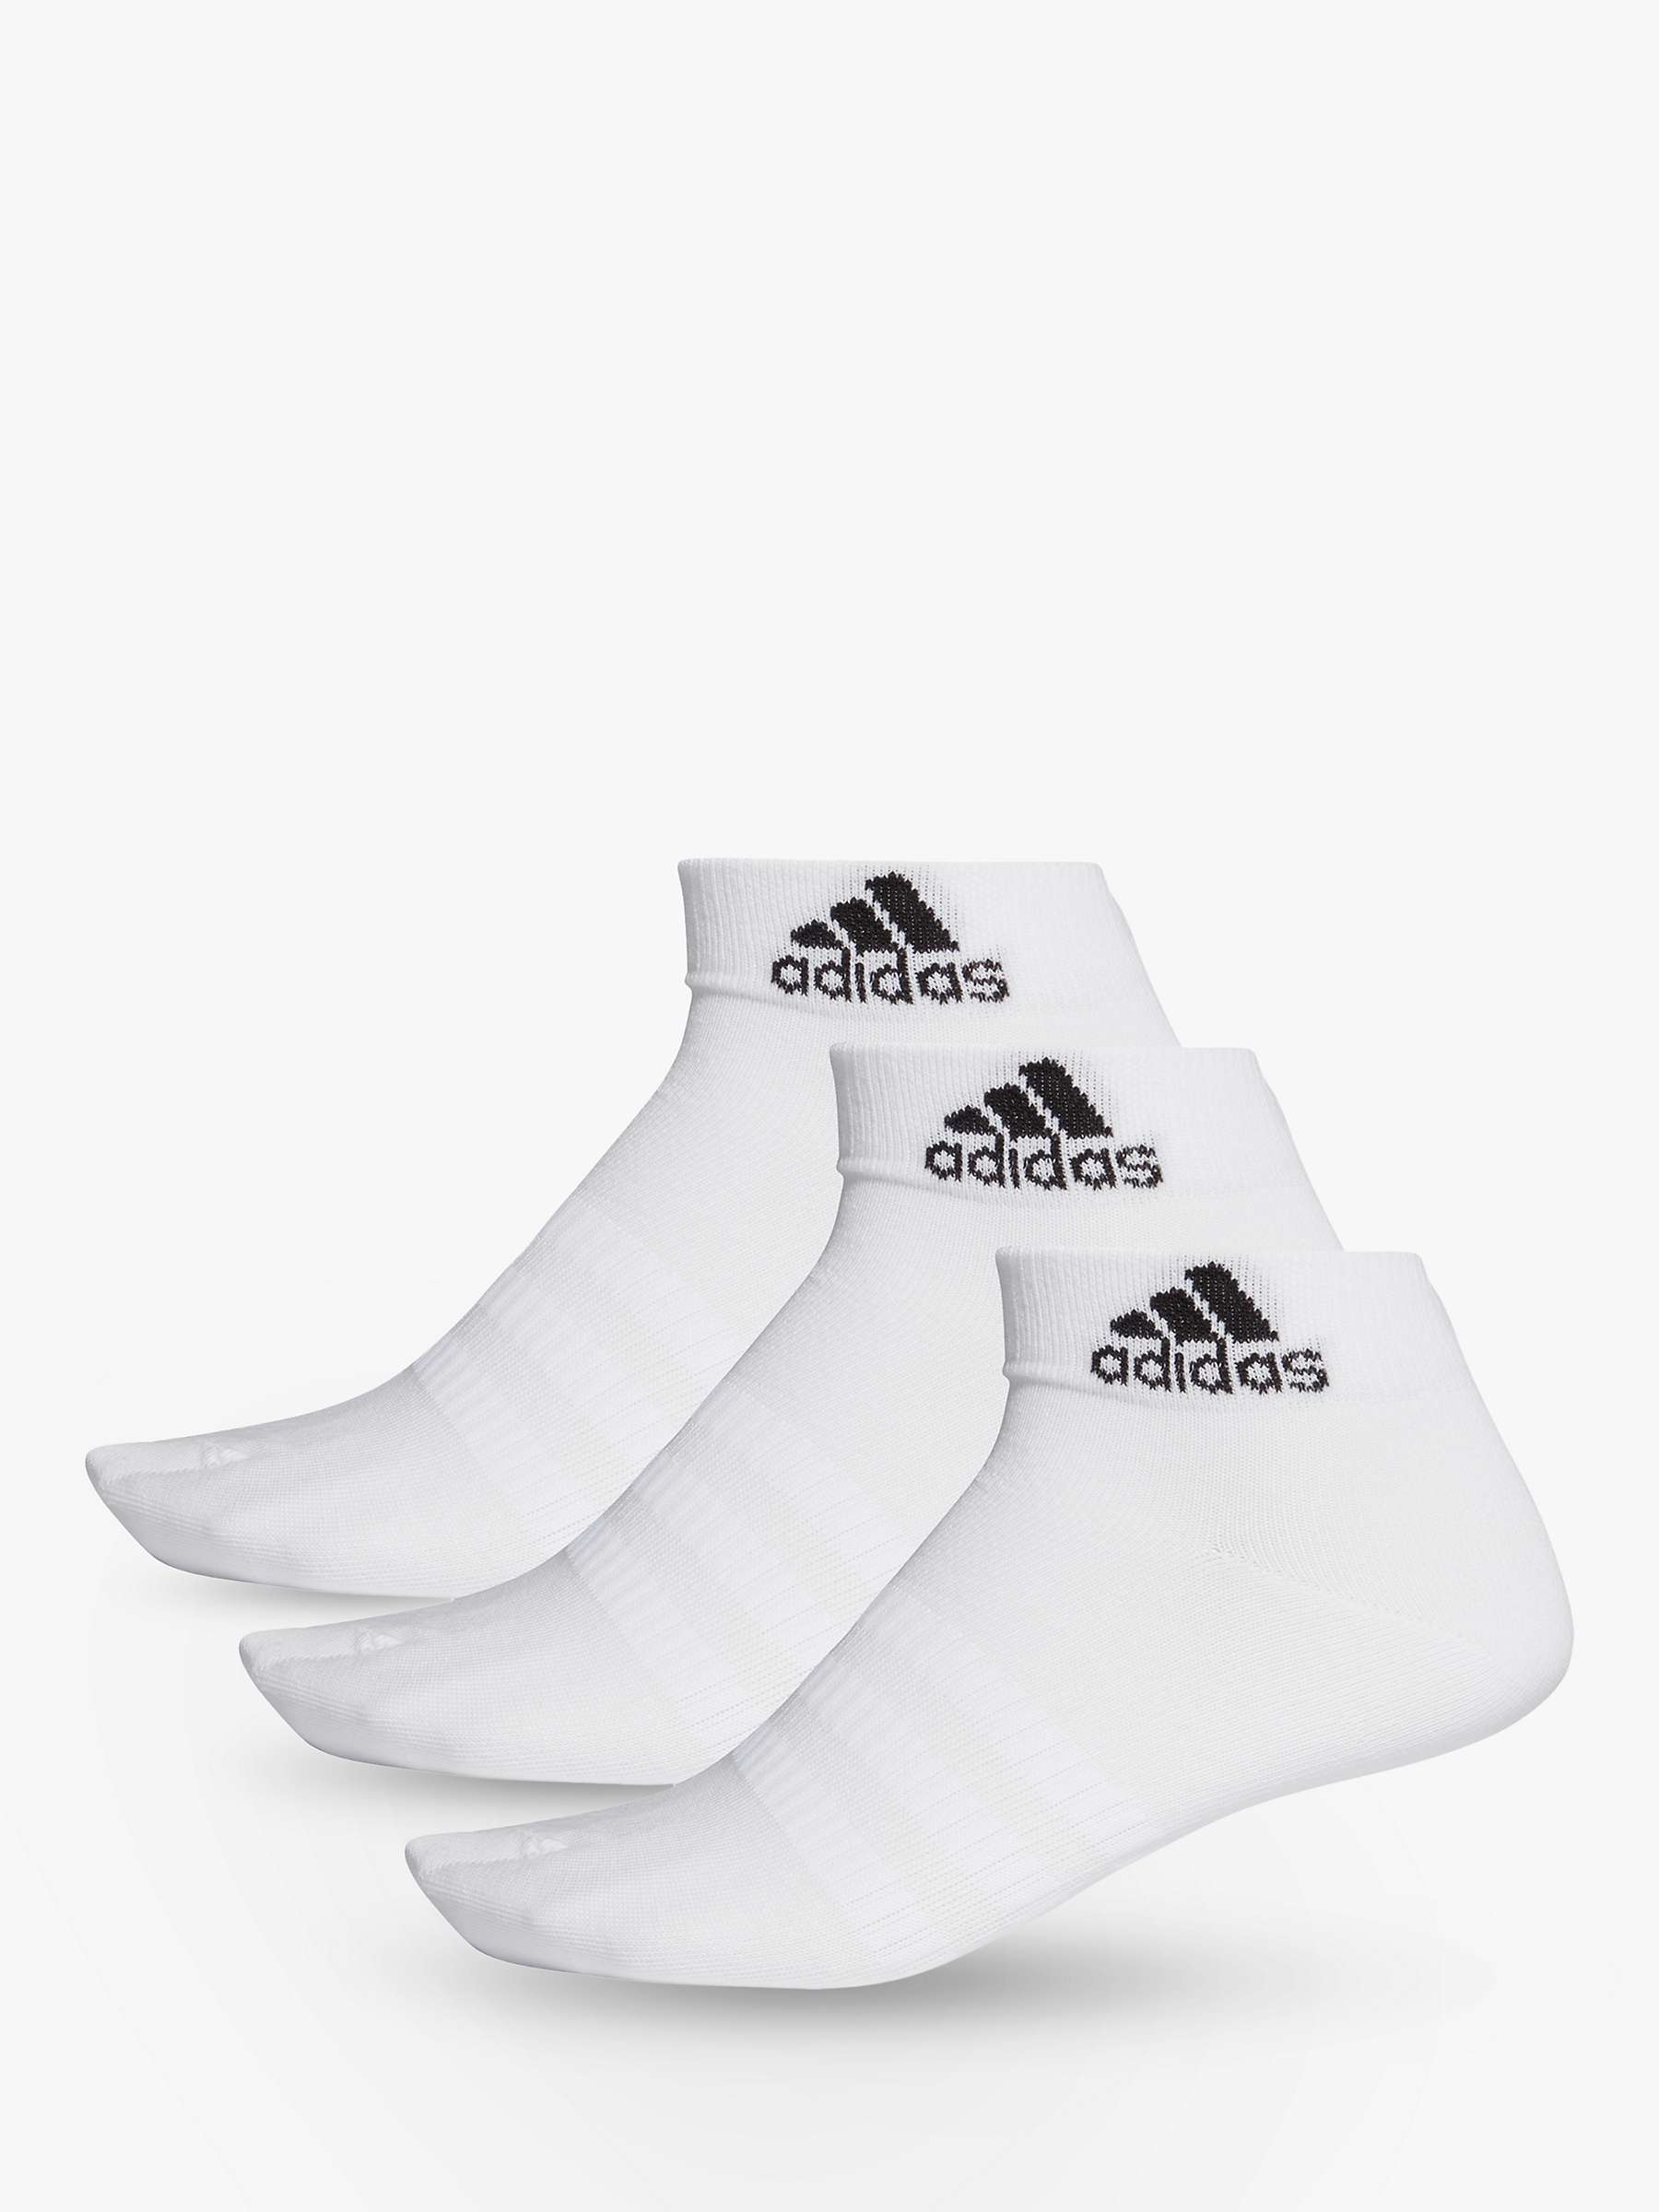 Buy adidas Light Training Ankle Socks, Pack of 3 Online at johnlewis.com